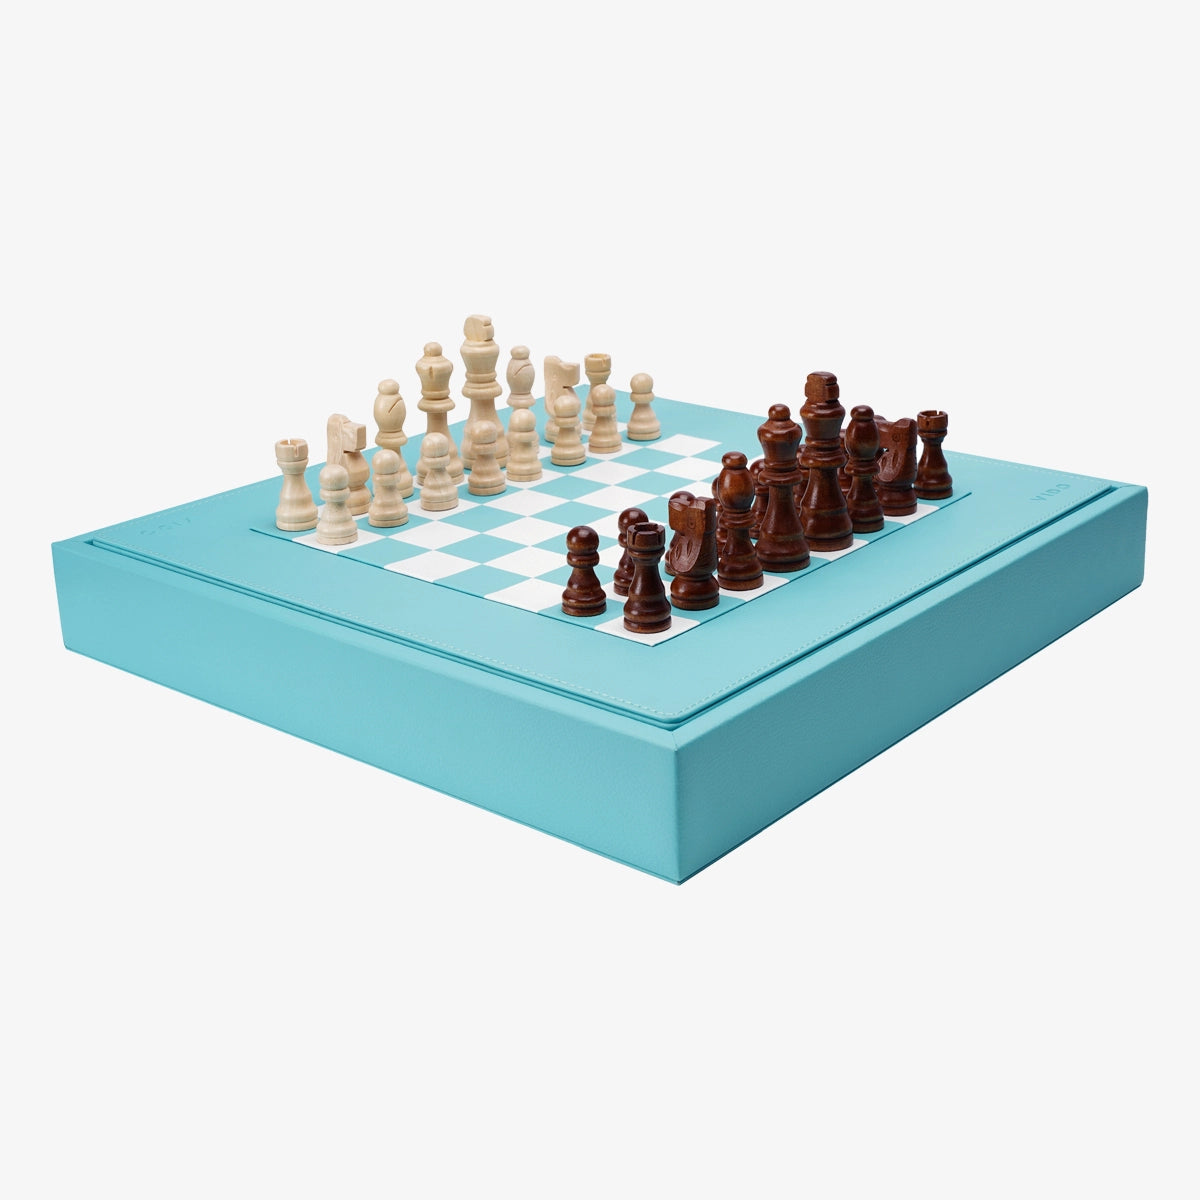 Luxury Chess Pieces Usa, Chess Pieces, Chess Sets Usa